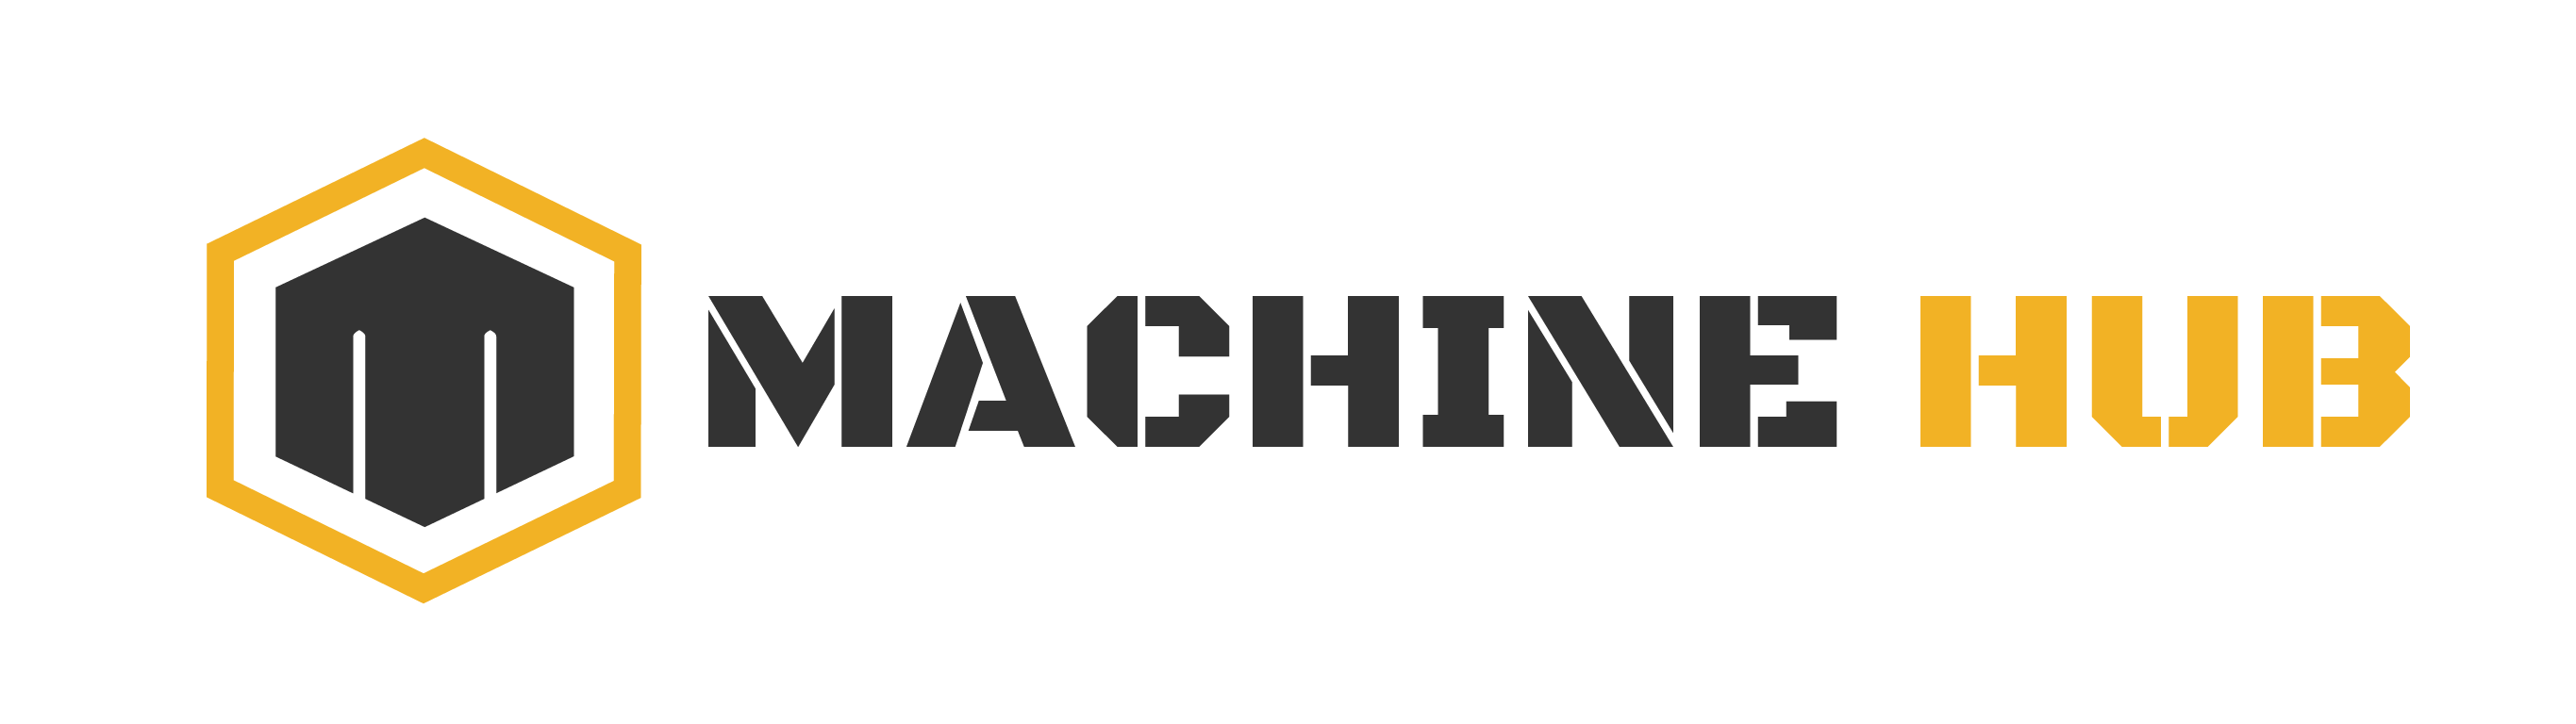 Machine Hub logo